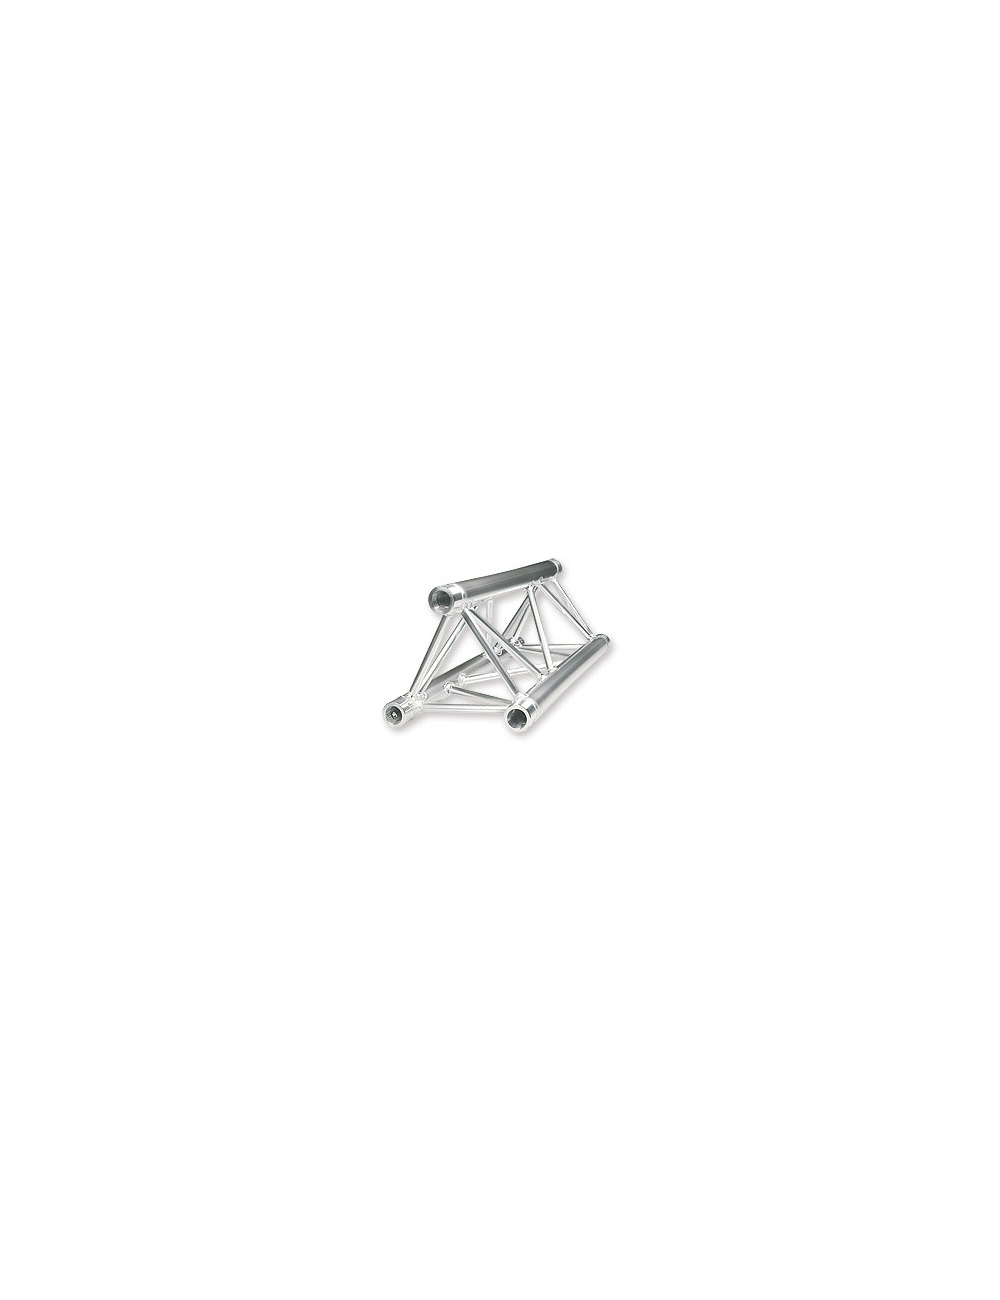 Triangular structure 290 ASD 3m50 - SX29350